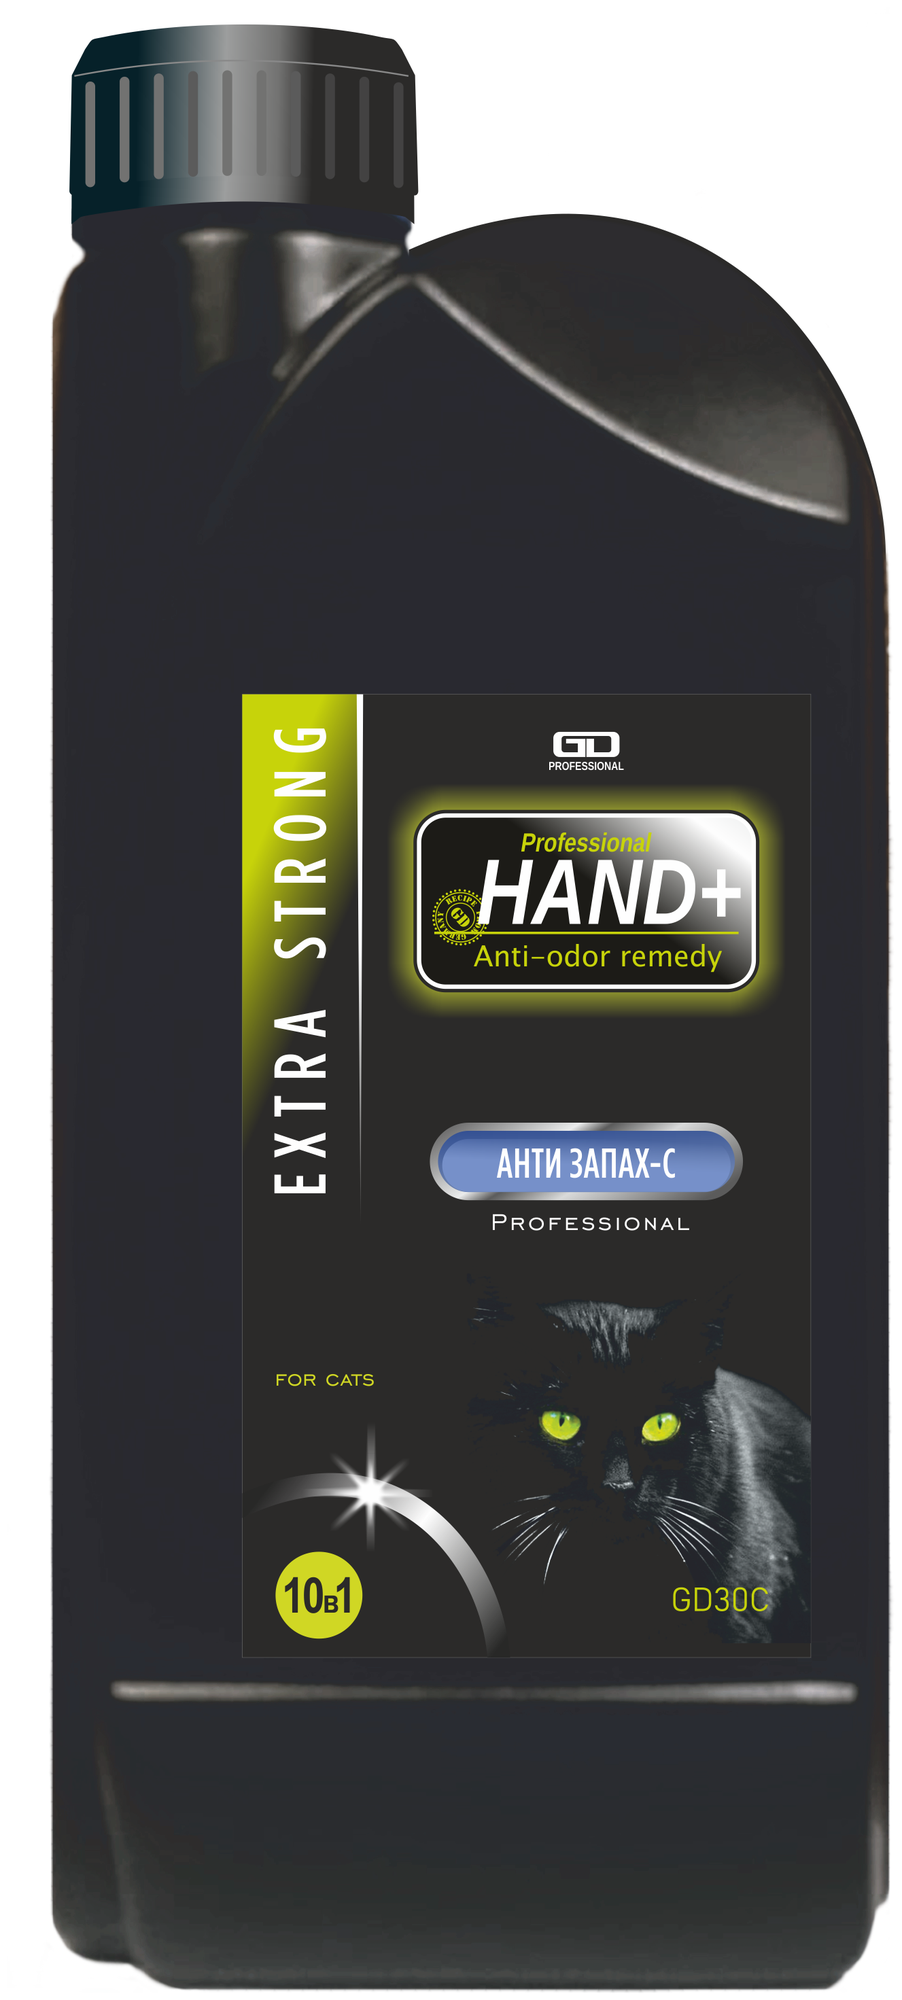 Анти запах-с Для кошек EXTRA STRONG. HAND+ Professional, флакон 1 кг